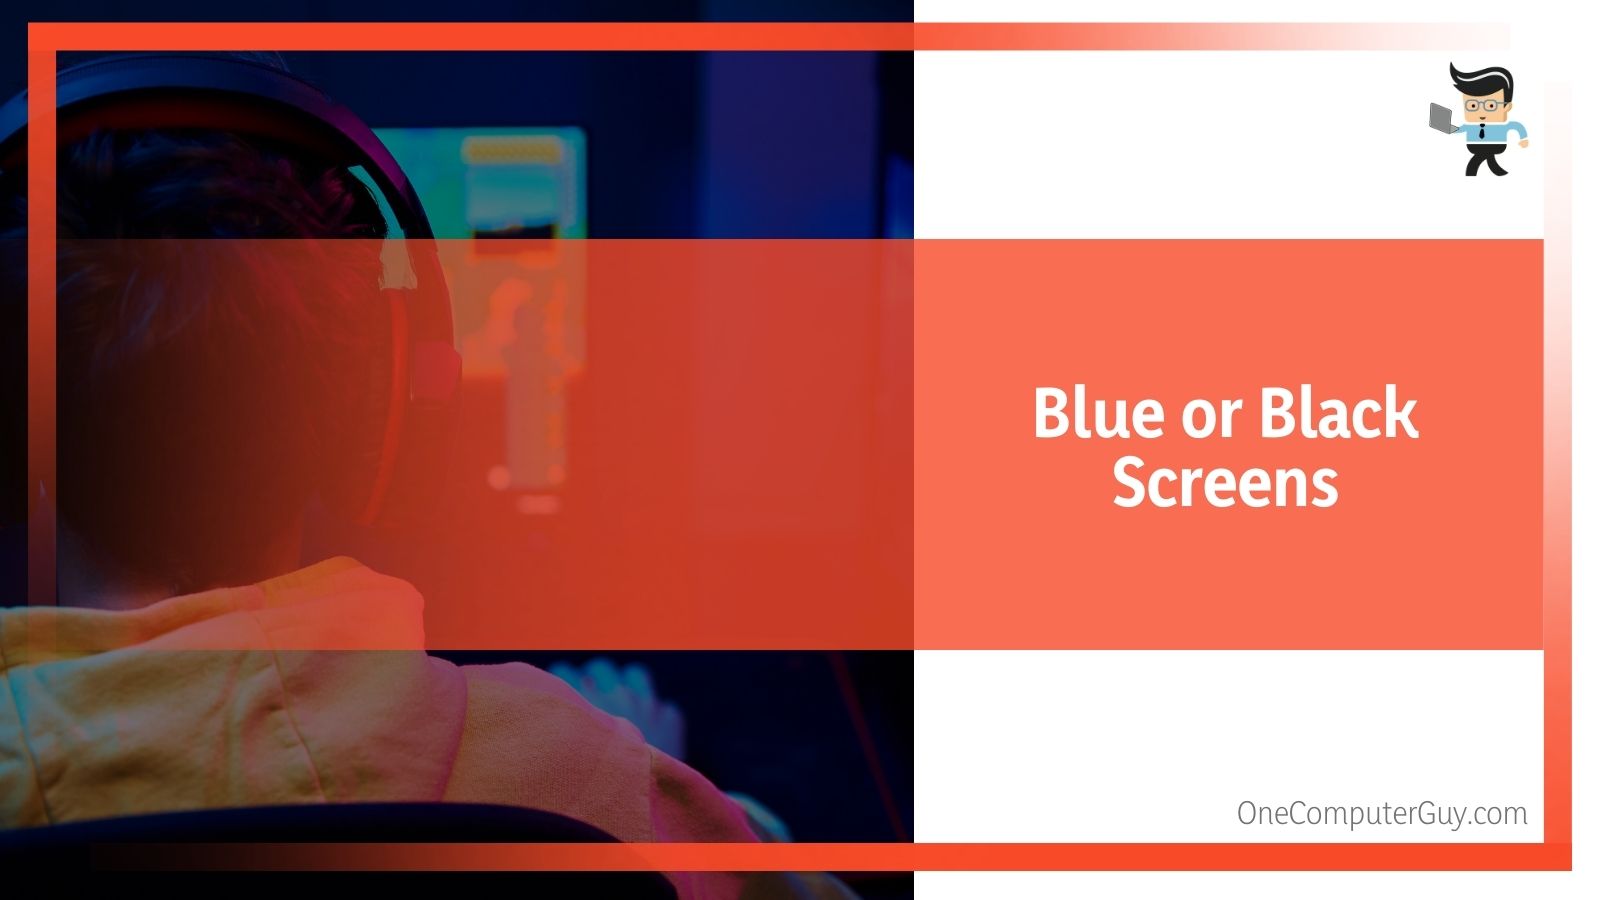 Blue or Black Screens